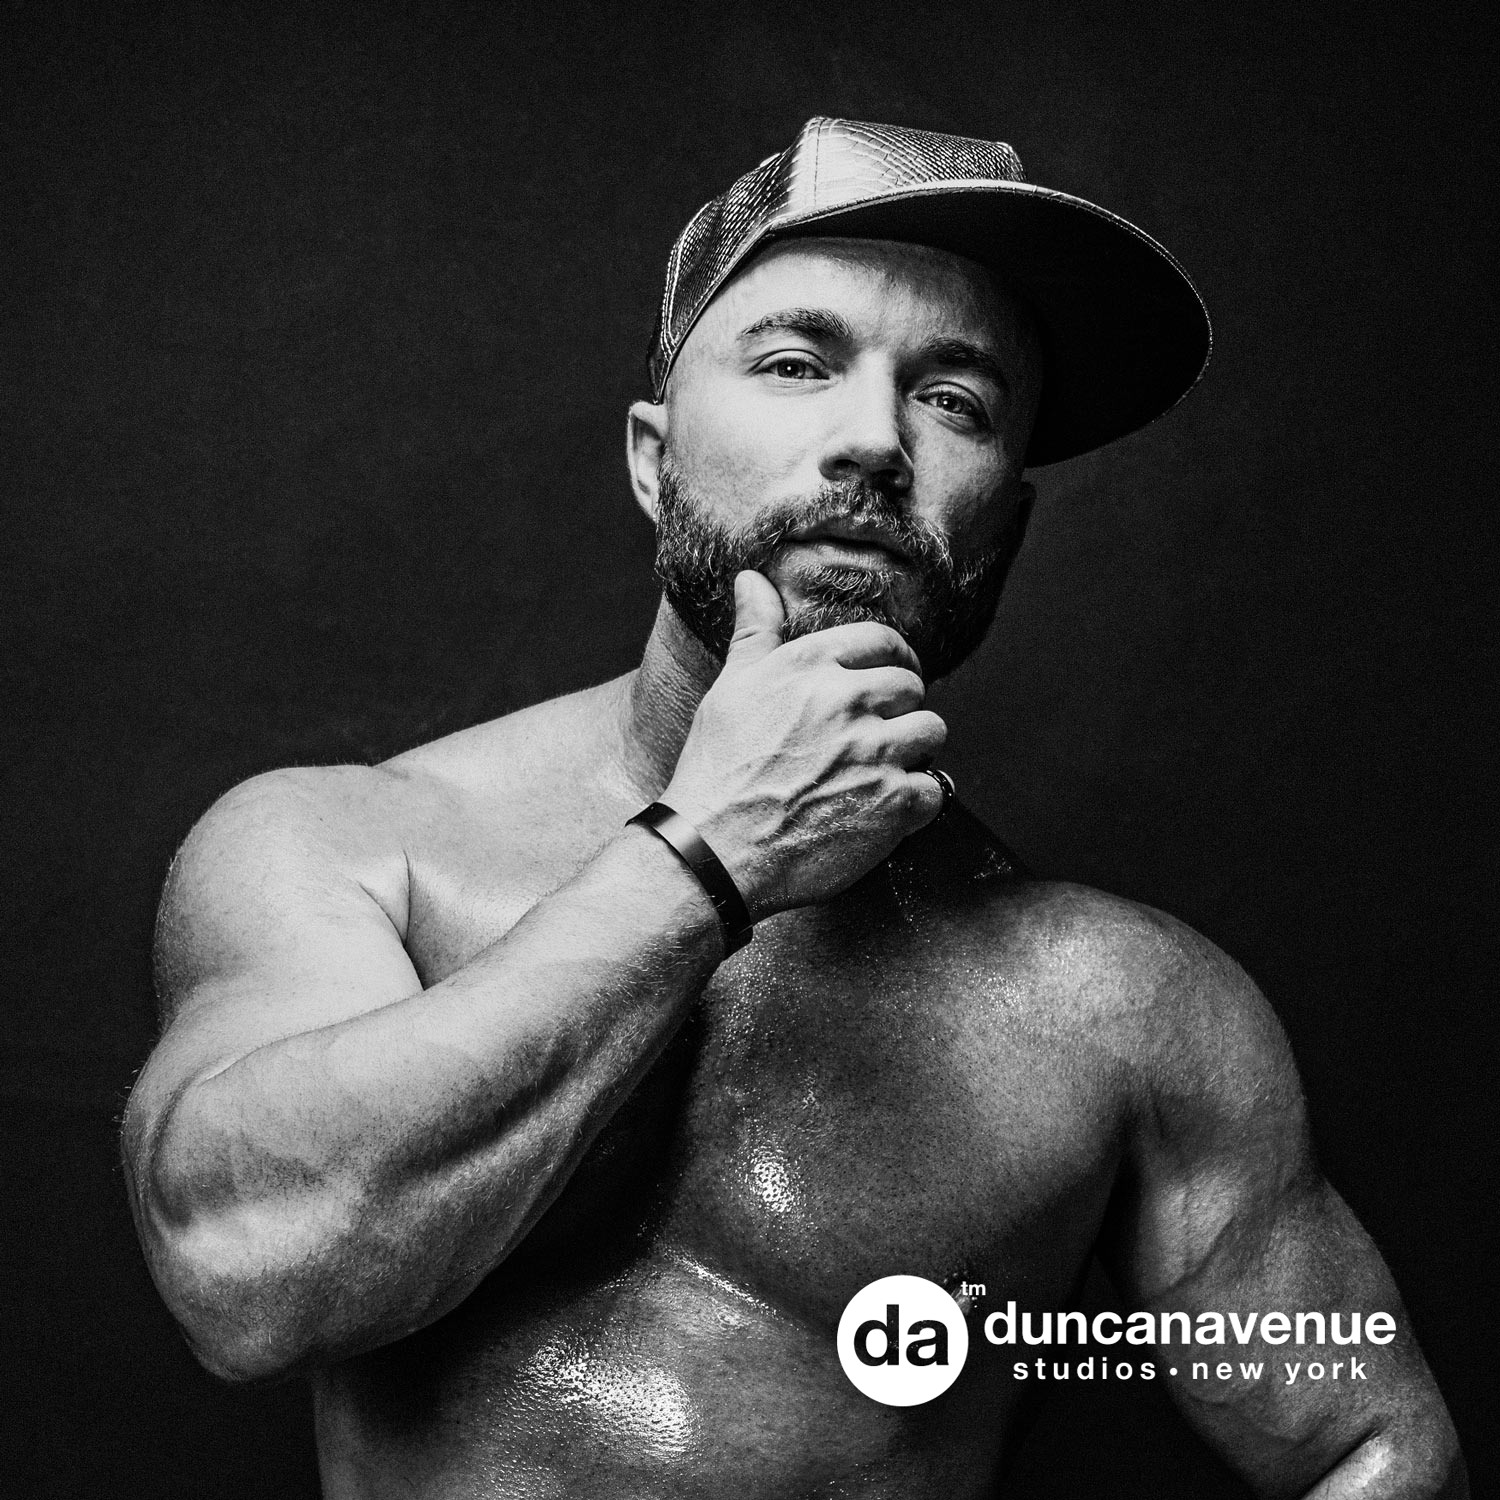 Bodybuilding / Fitness Lifestyle Photography Portfolio – Photographer Maxwell Alexander